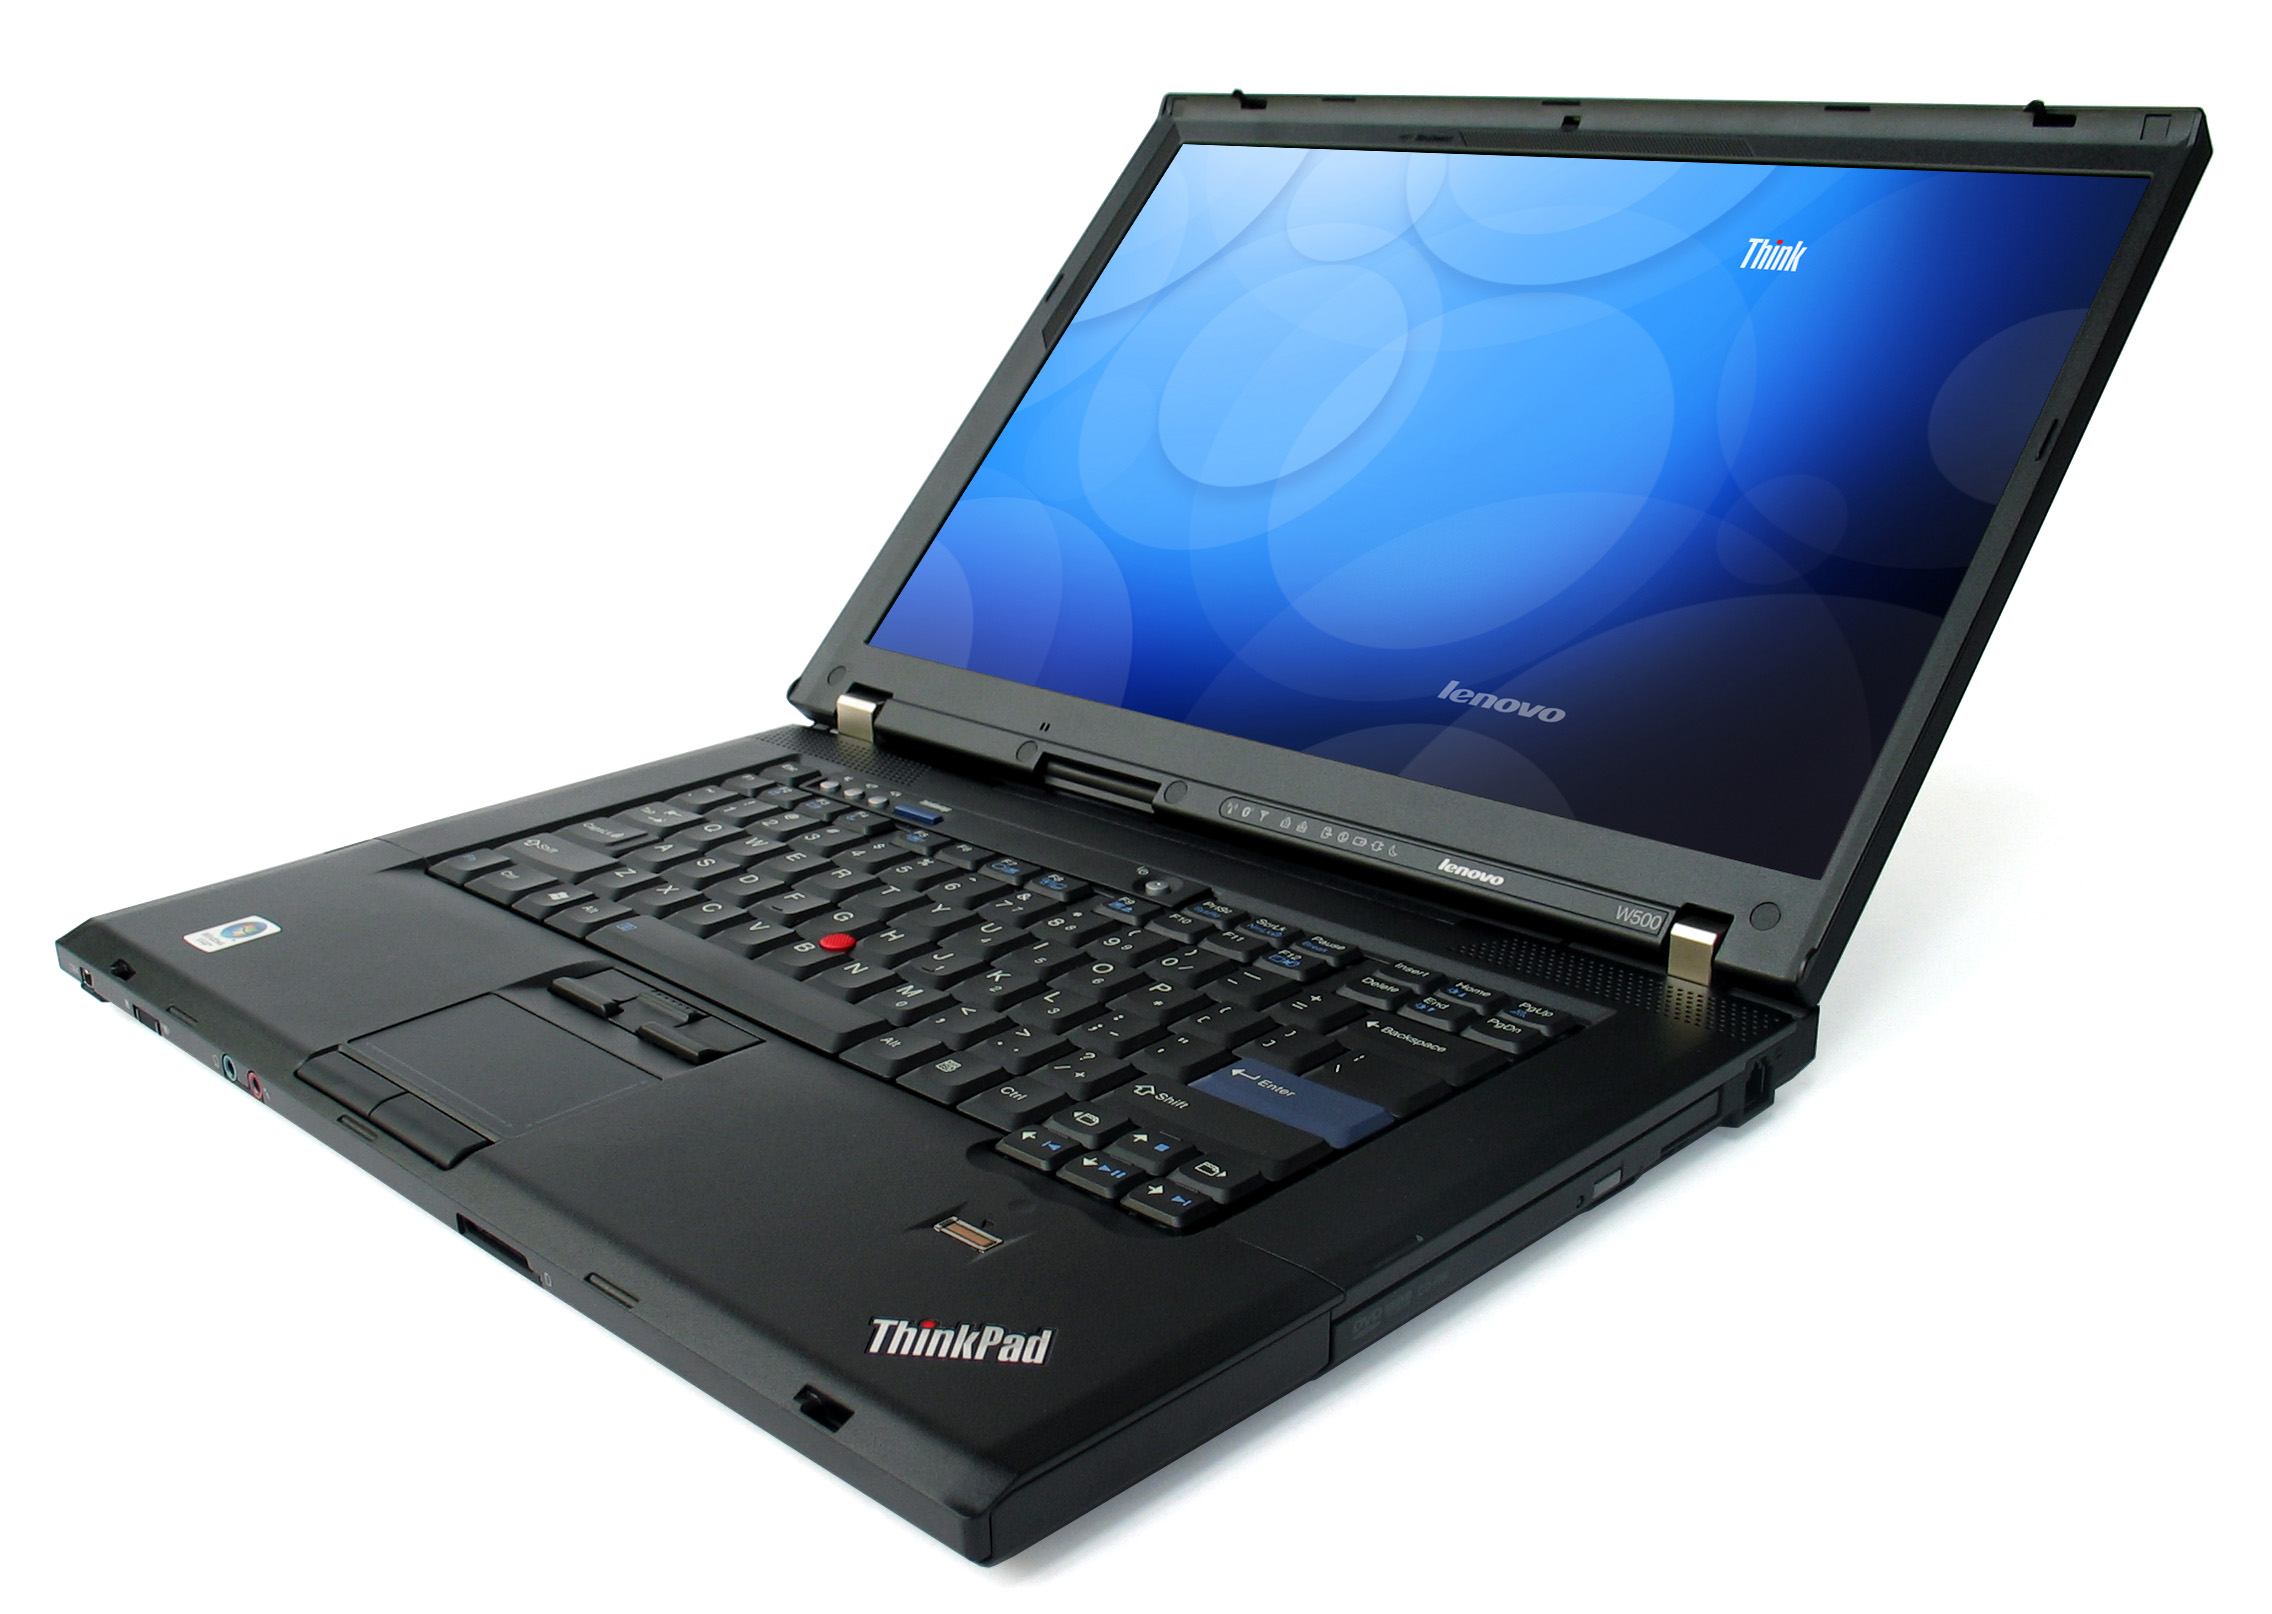 Lenovo W500 - Notebookcheck.net External Reviews